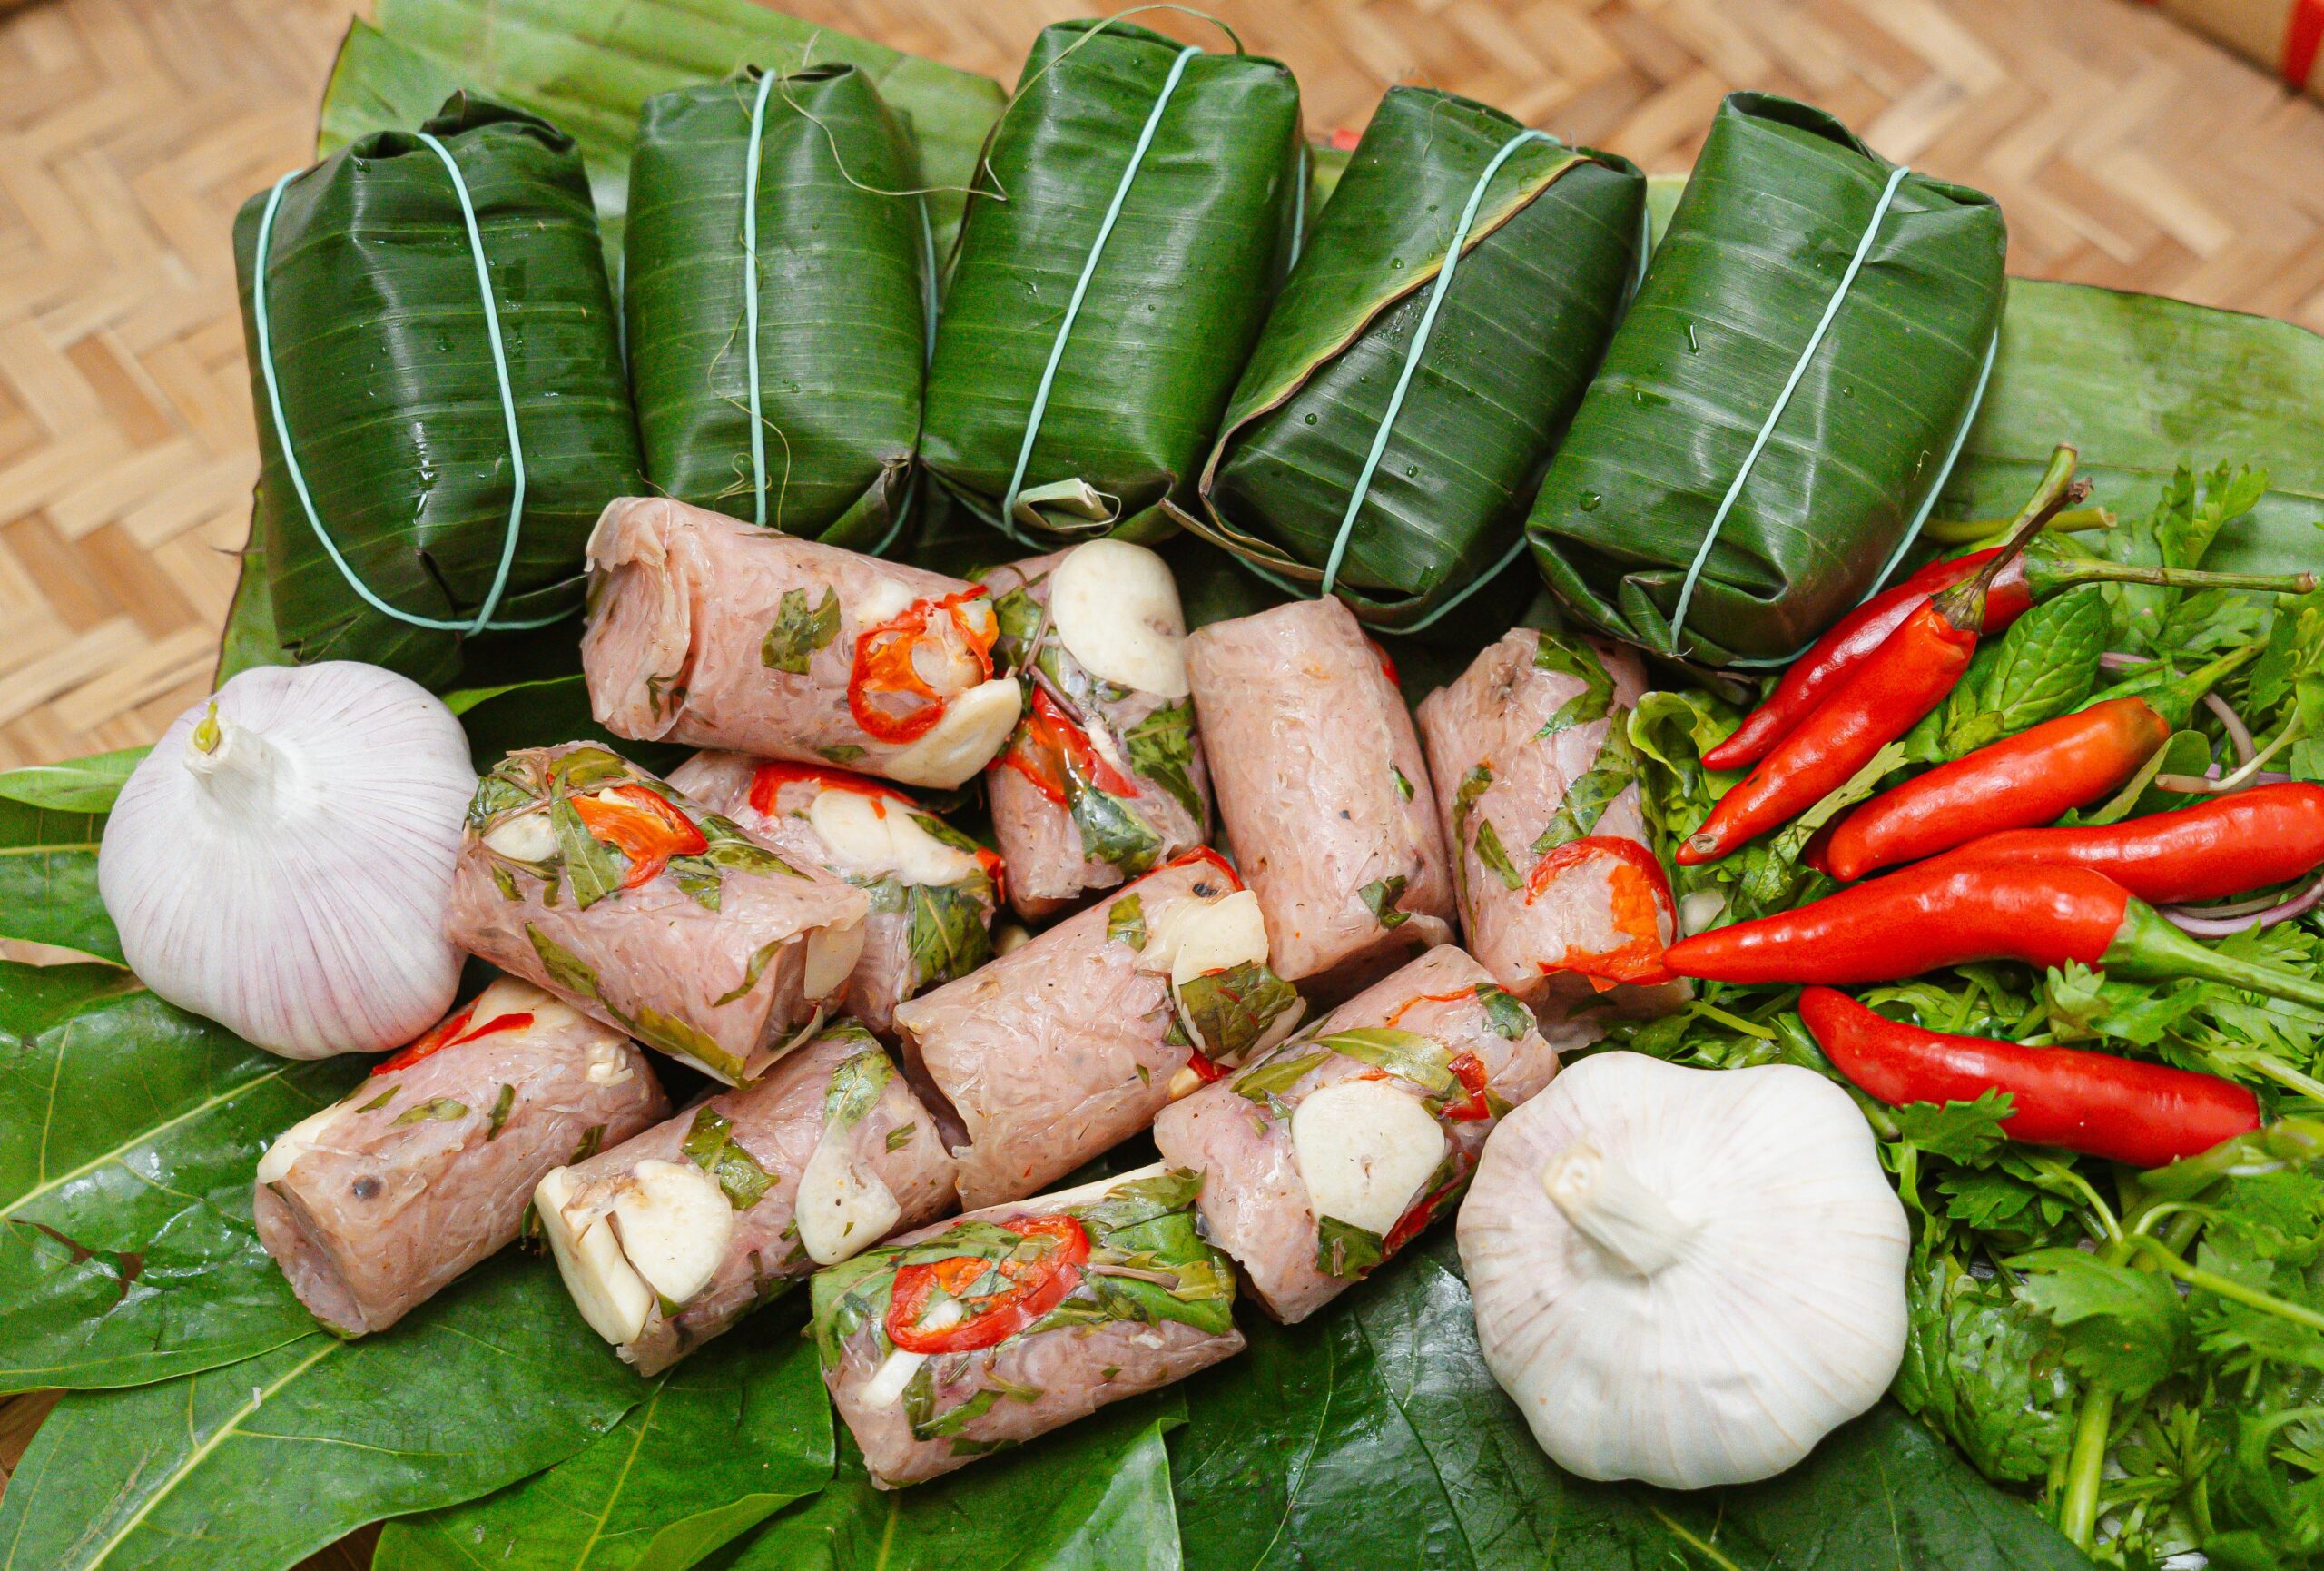 Top 10 unusual foods to try in Vietnam: Nem Chua (Vietnamese Fermented Pork Roll)